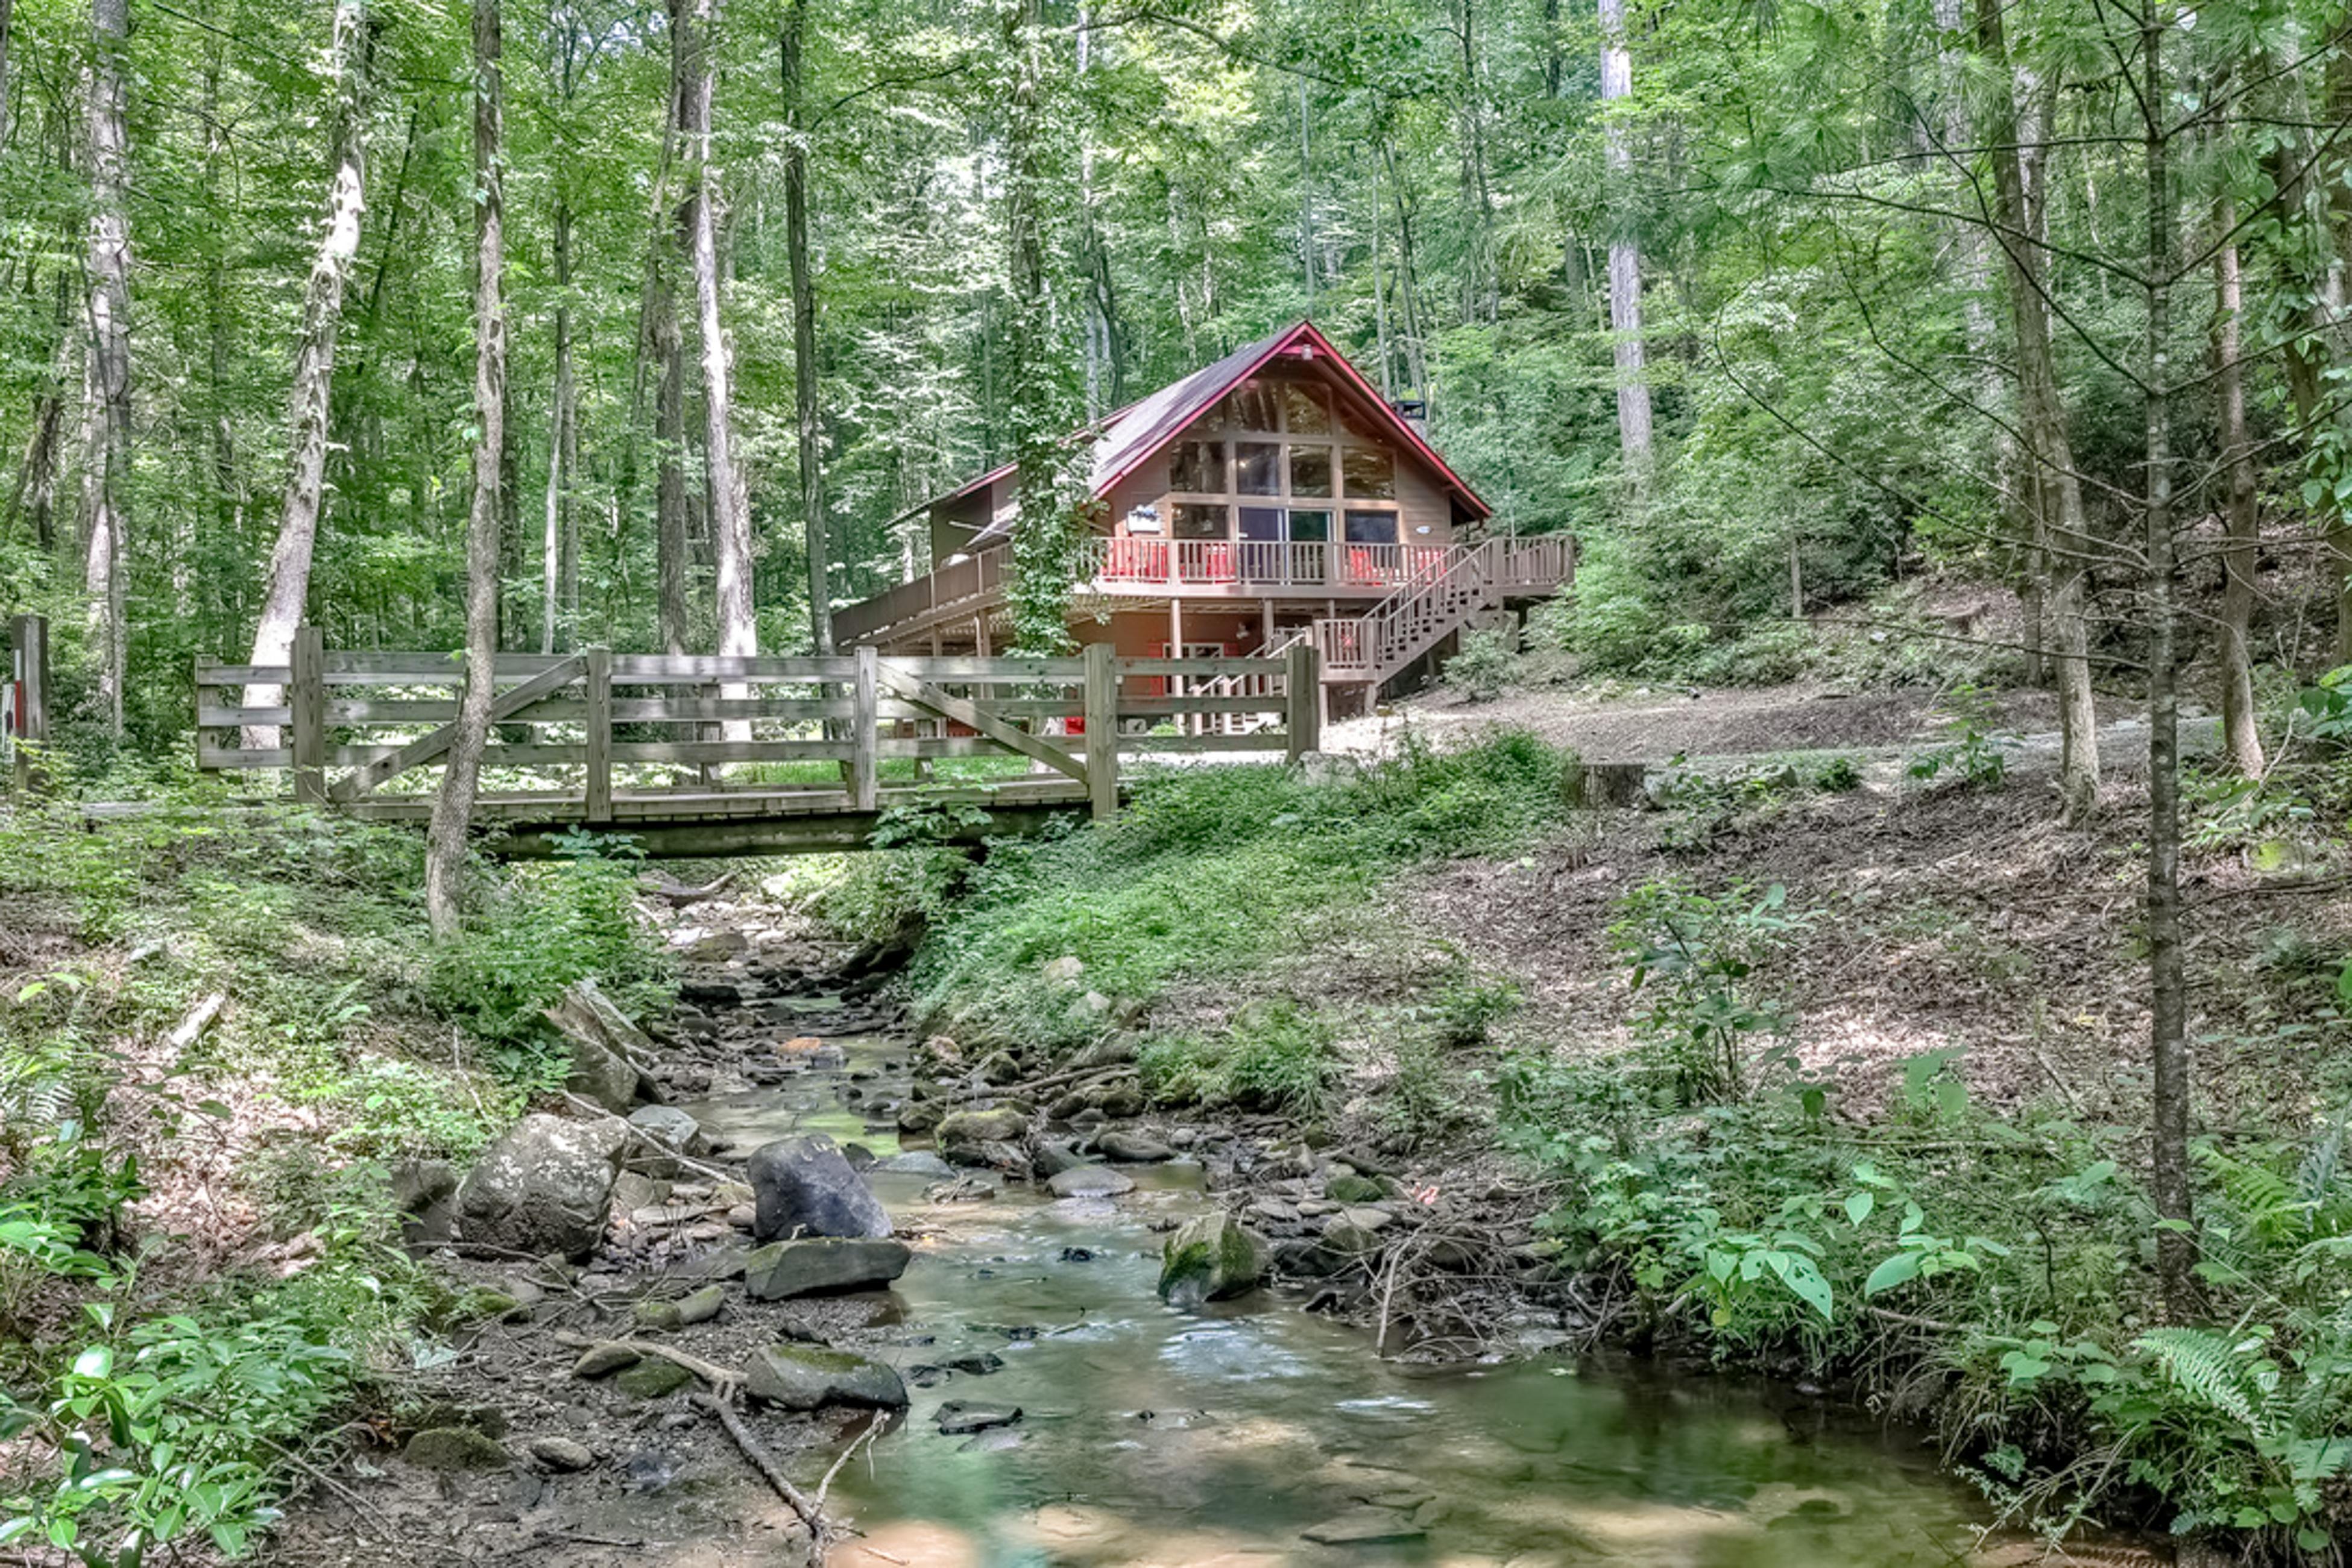 The GA Lake Lodge